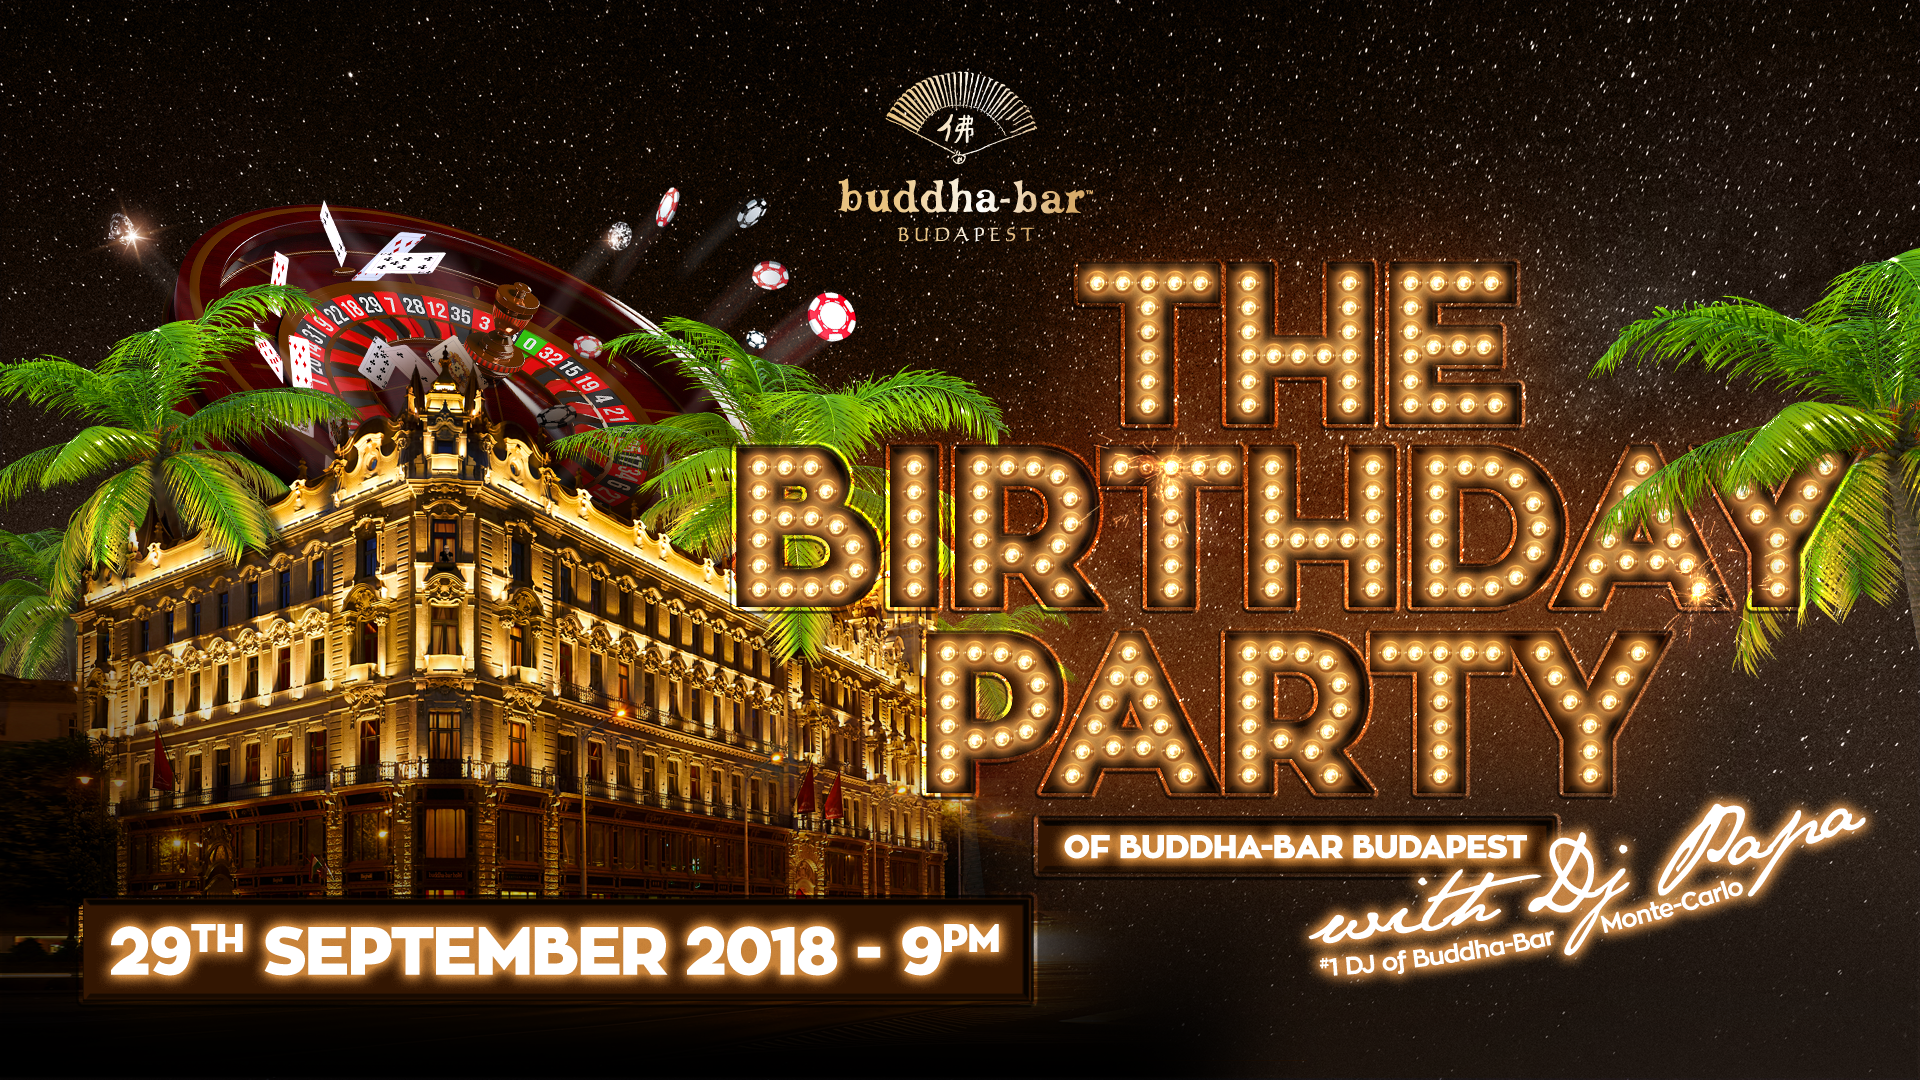 Buddha-Bar Hotel Budapest Celebrated Its 6th Birthday With A Stylish Casino-Party On 29 September